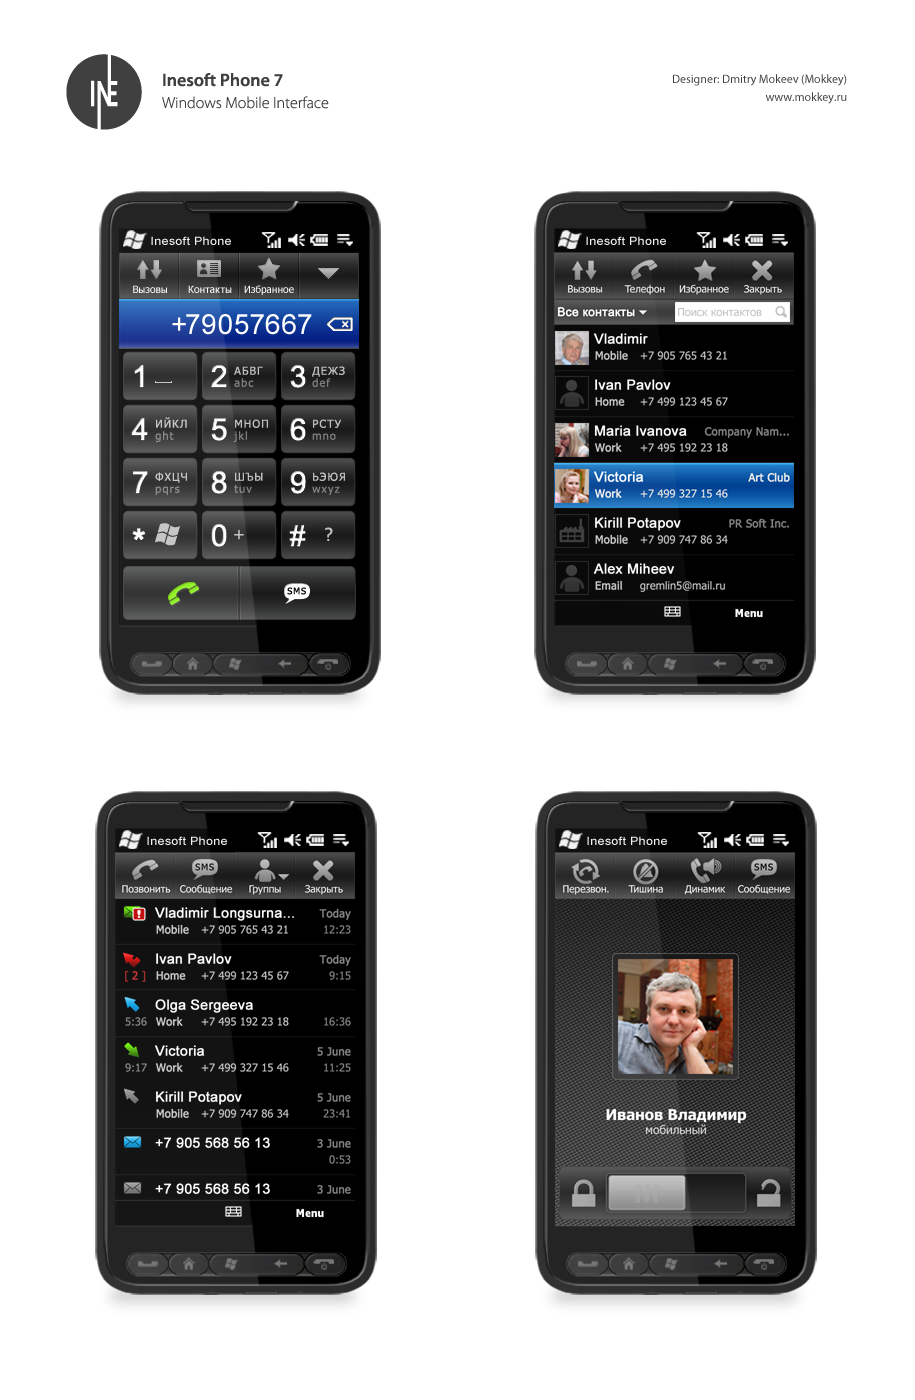 Inesoft Phone 7 — Win Mobile